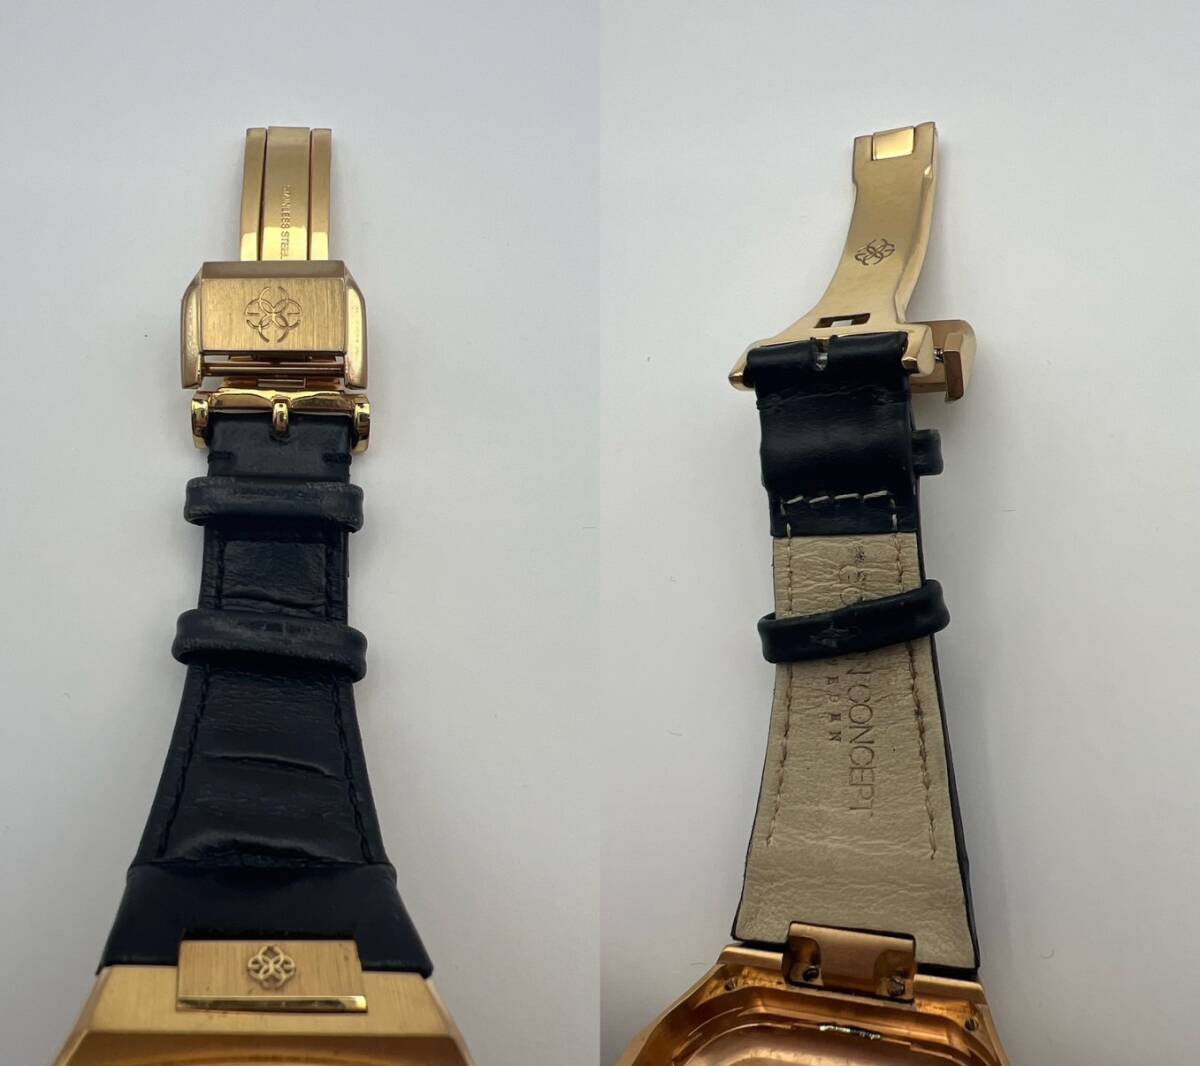  золотой концепция GOLDEN CONCEPT Apple Watch Case CL-44 Gold Apple часы кейс 848/9999 Junk 1 иен ~